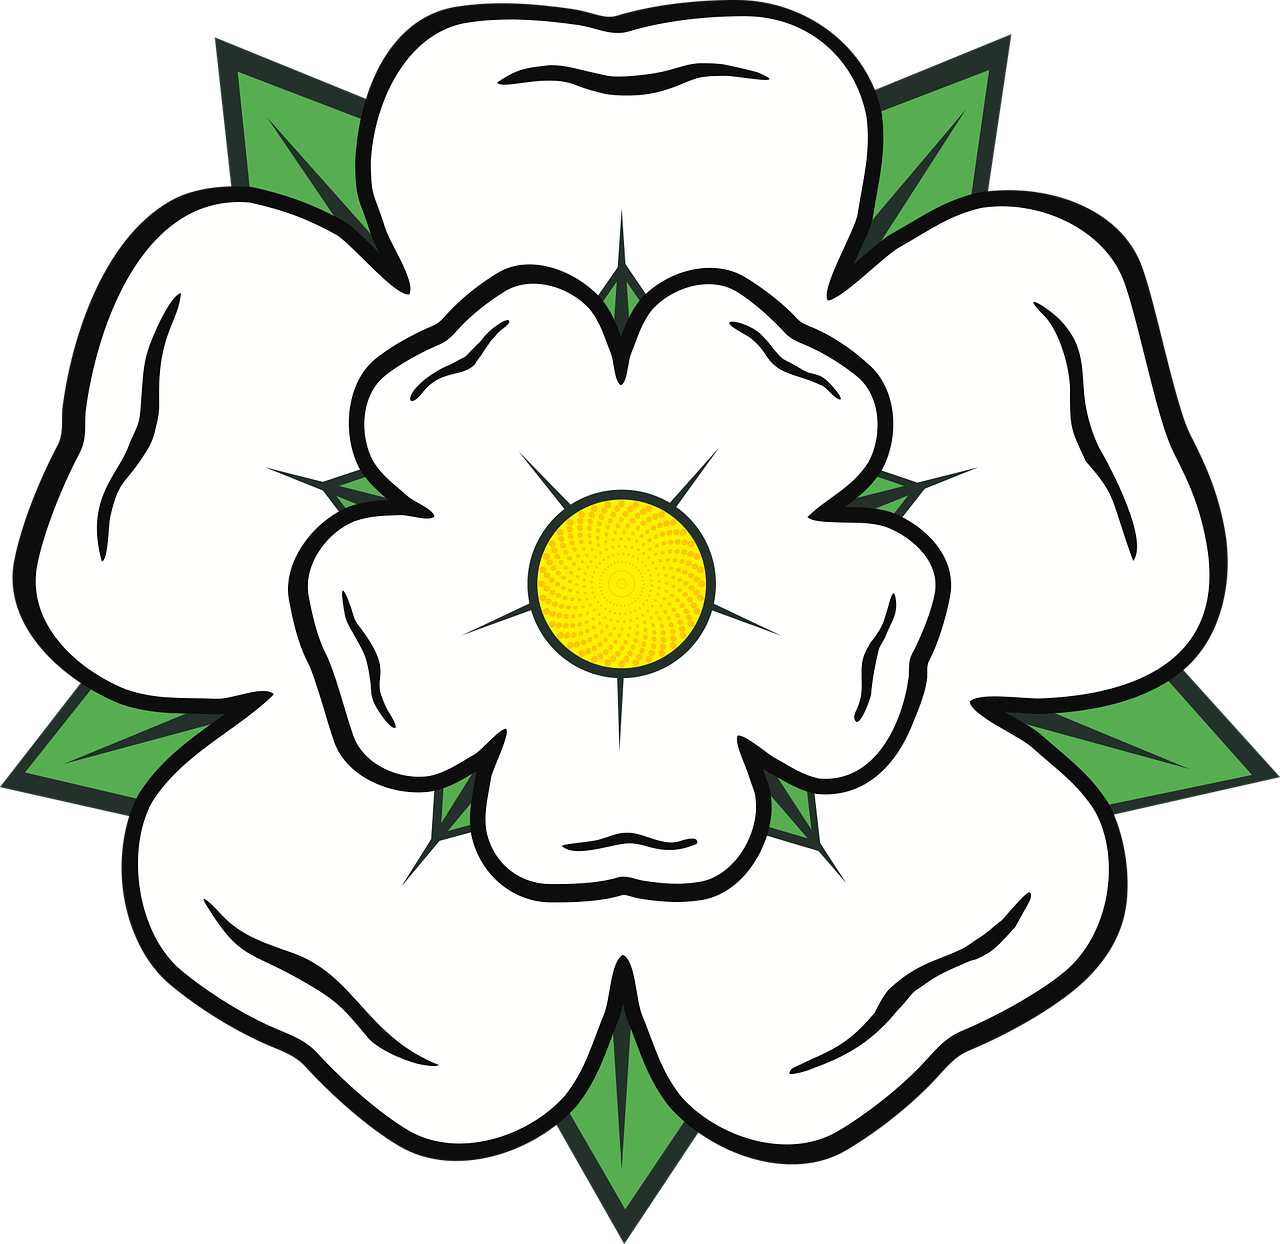 yorkshire rose county england free photo